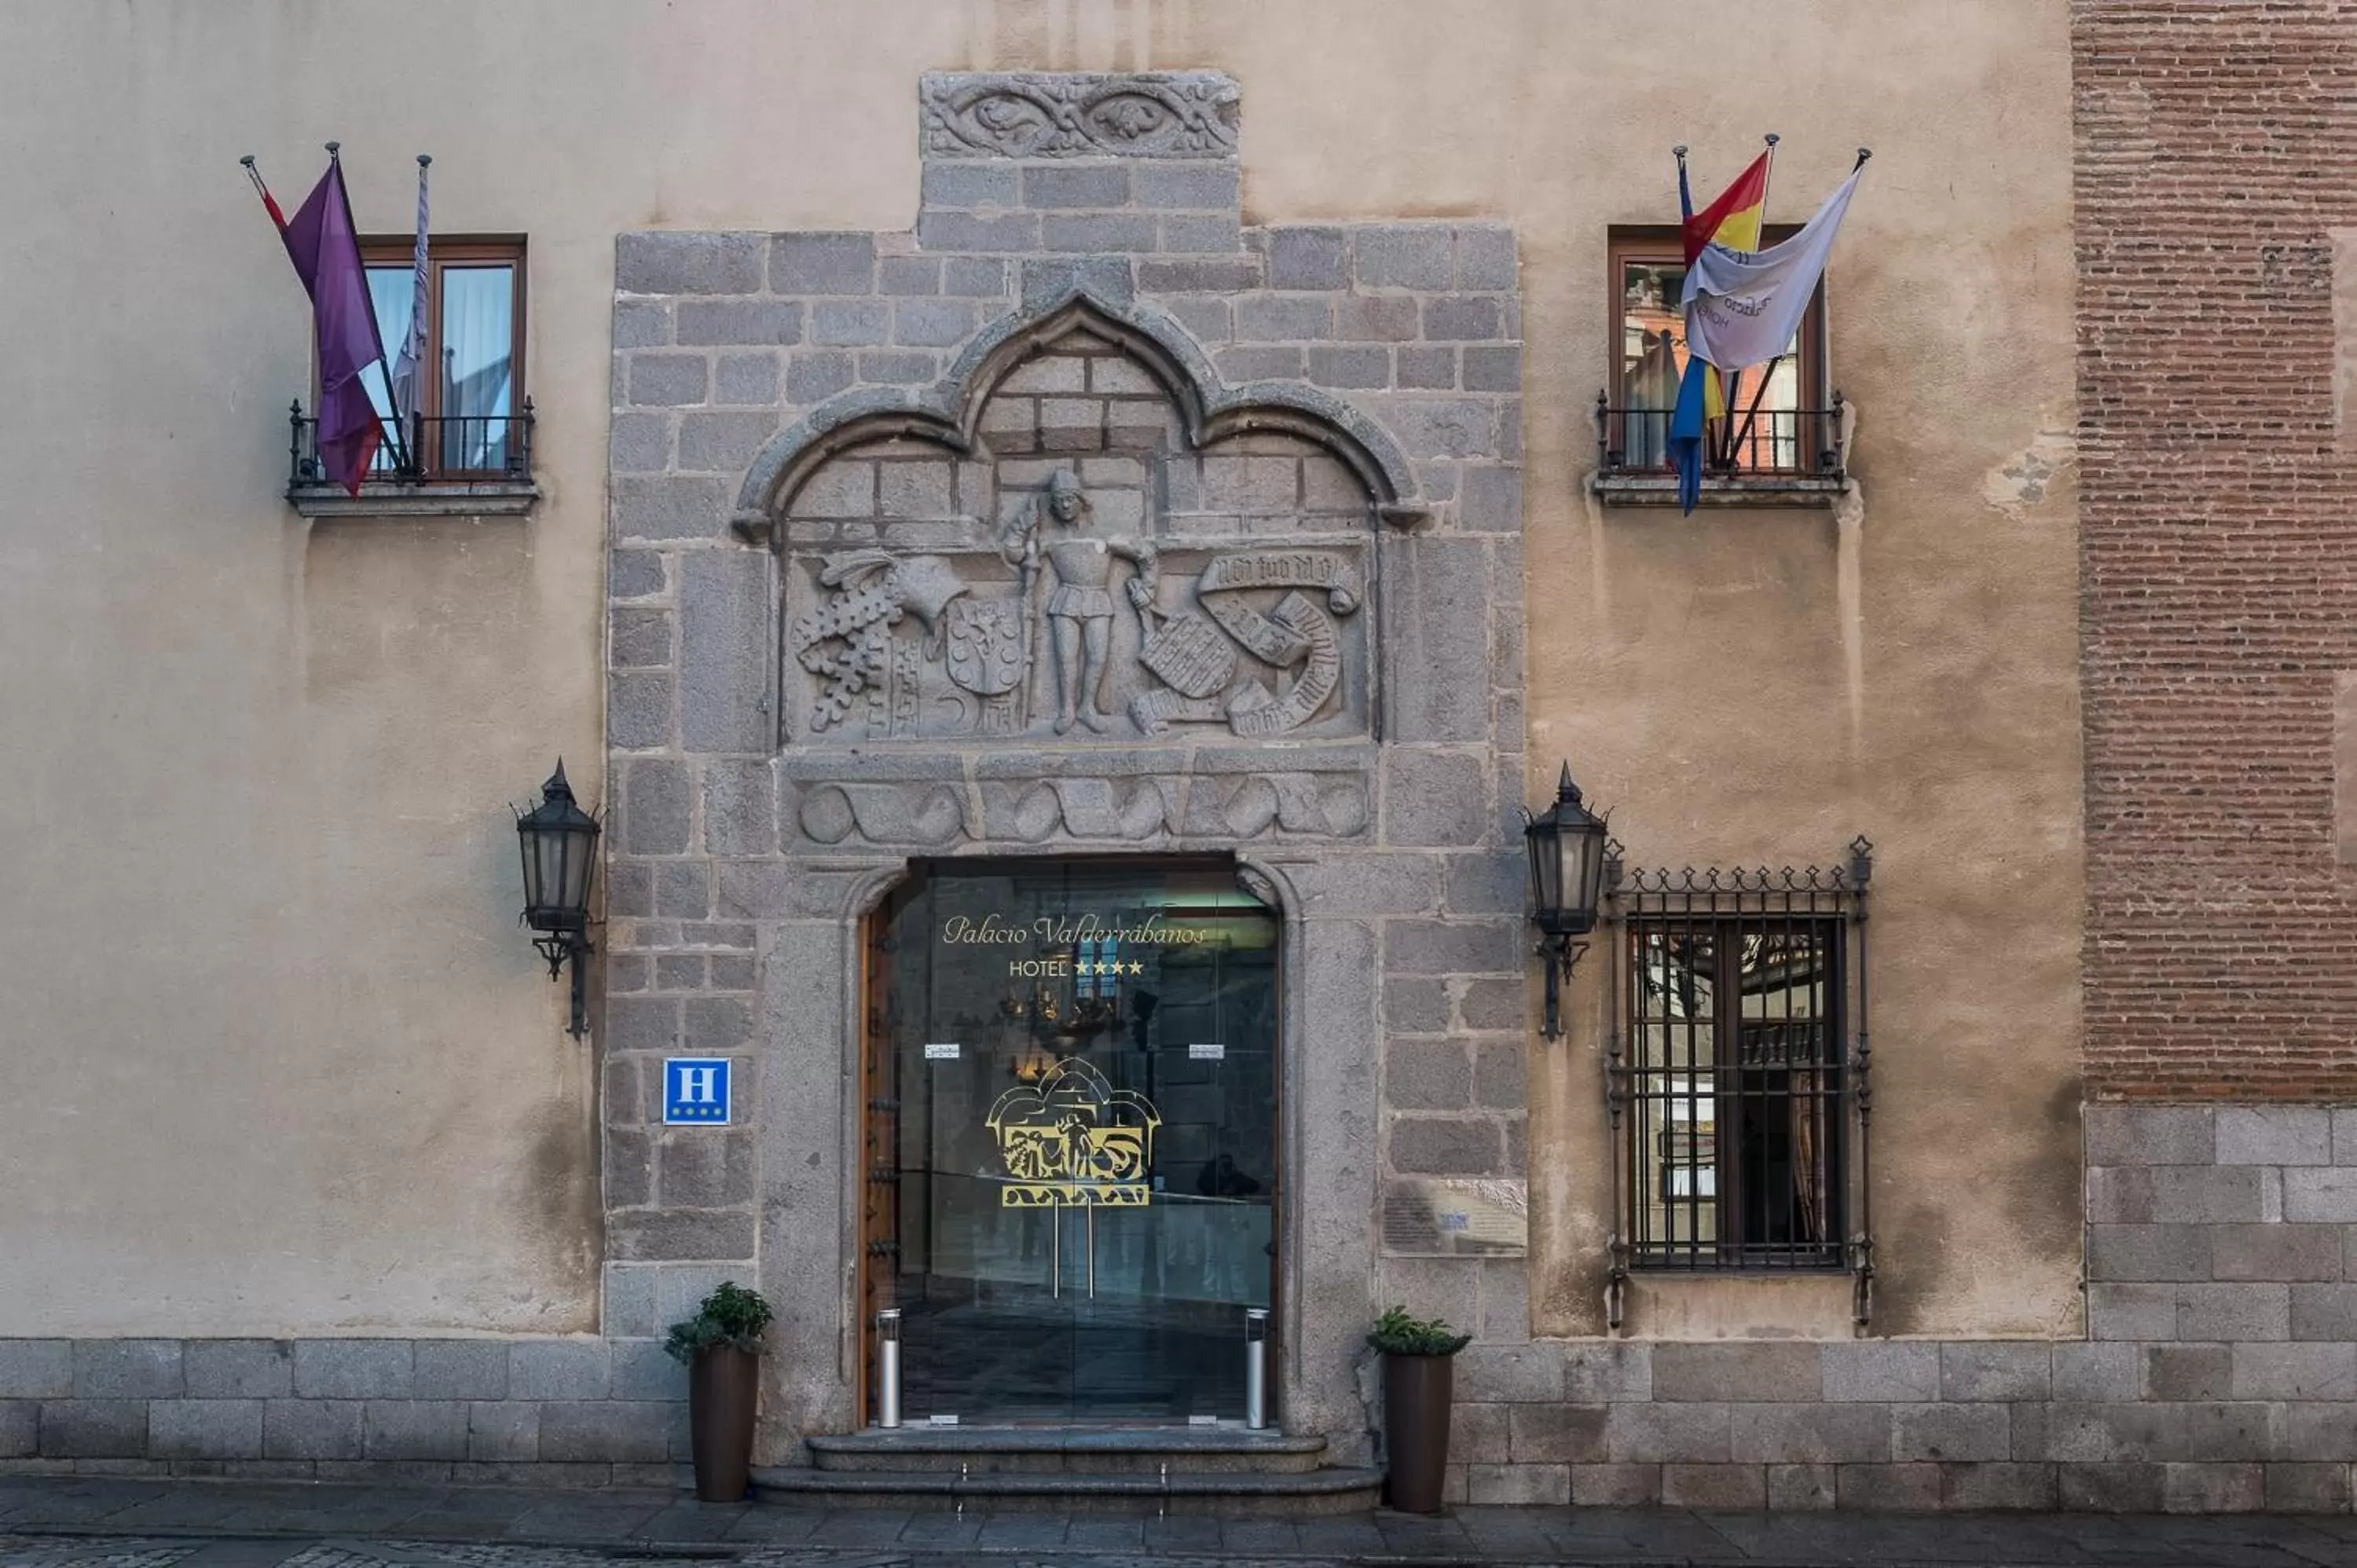 Facade/entrance in Palacio Valderrabanos